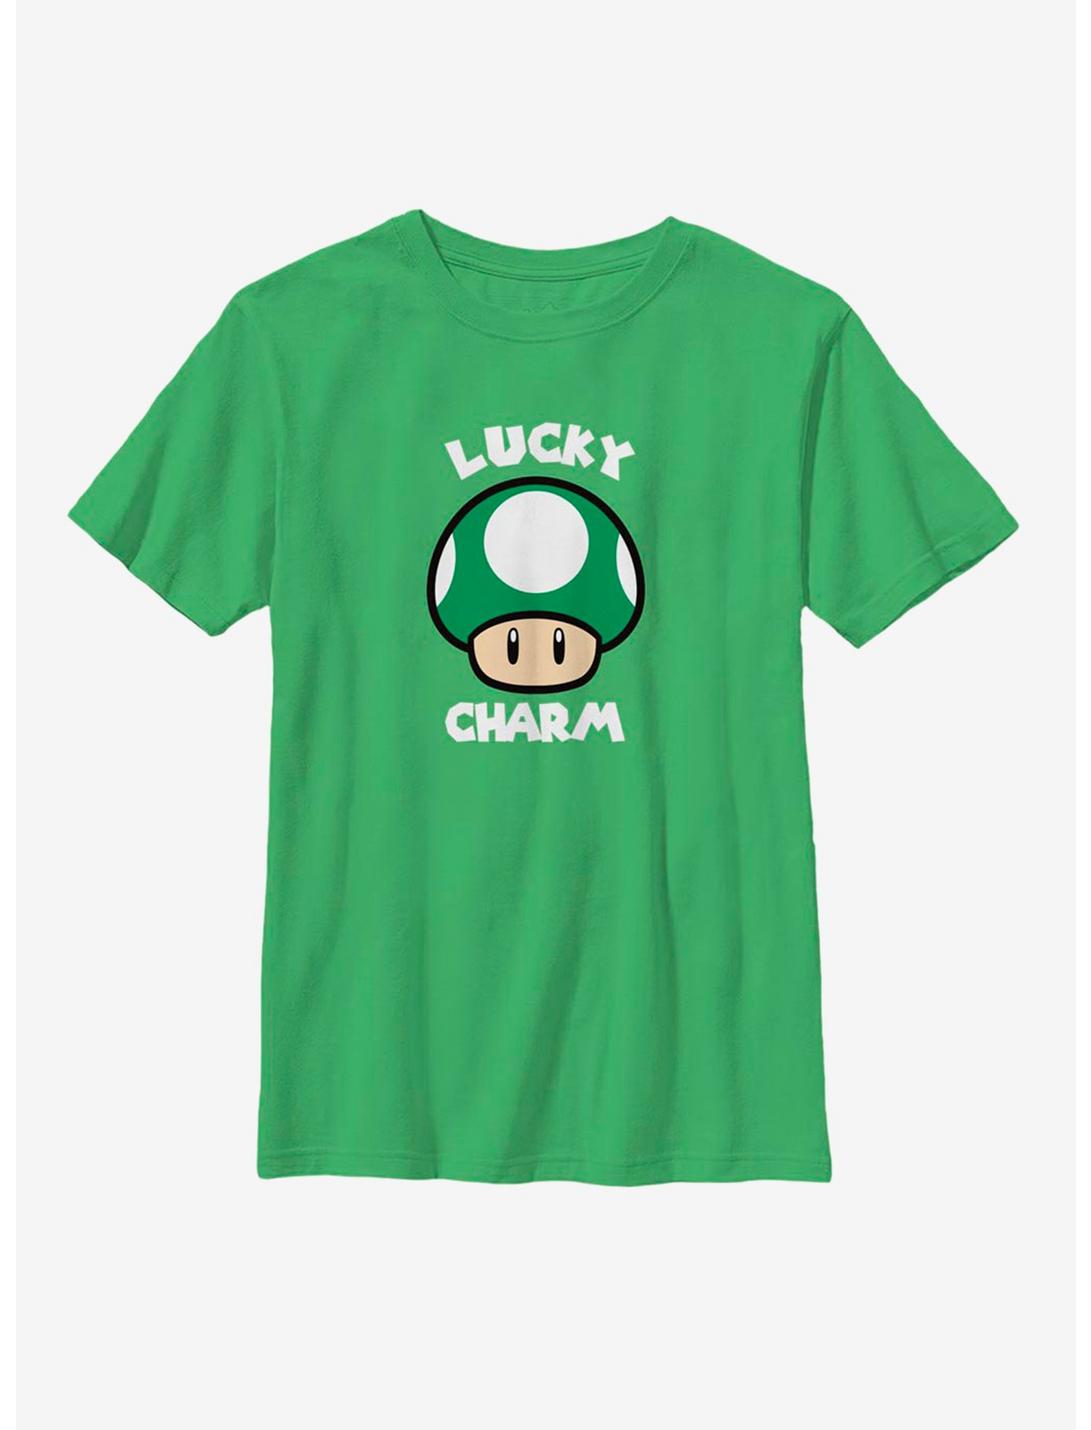 Nintendo Mario Lucky Mushroom Youth T-Shirt, KELLY, hi-res